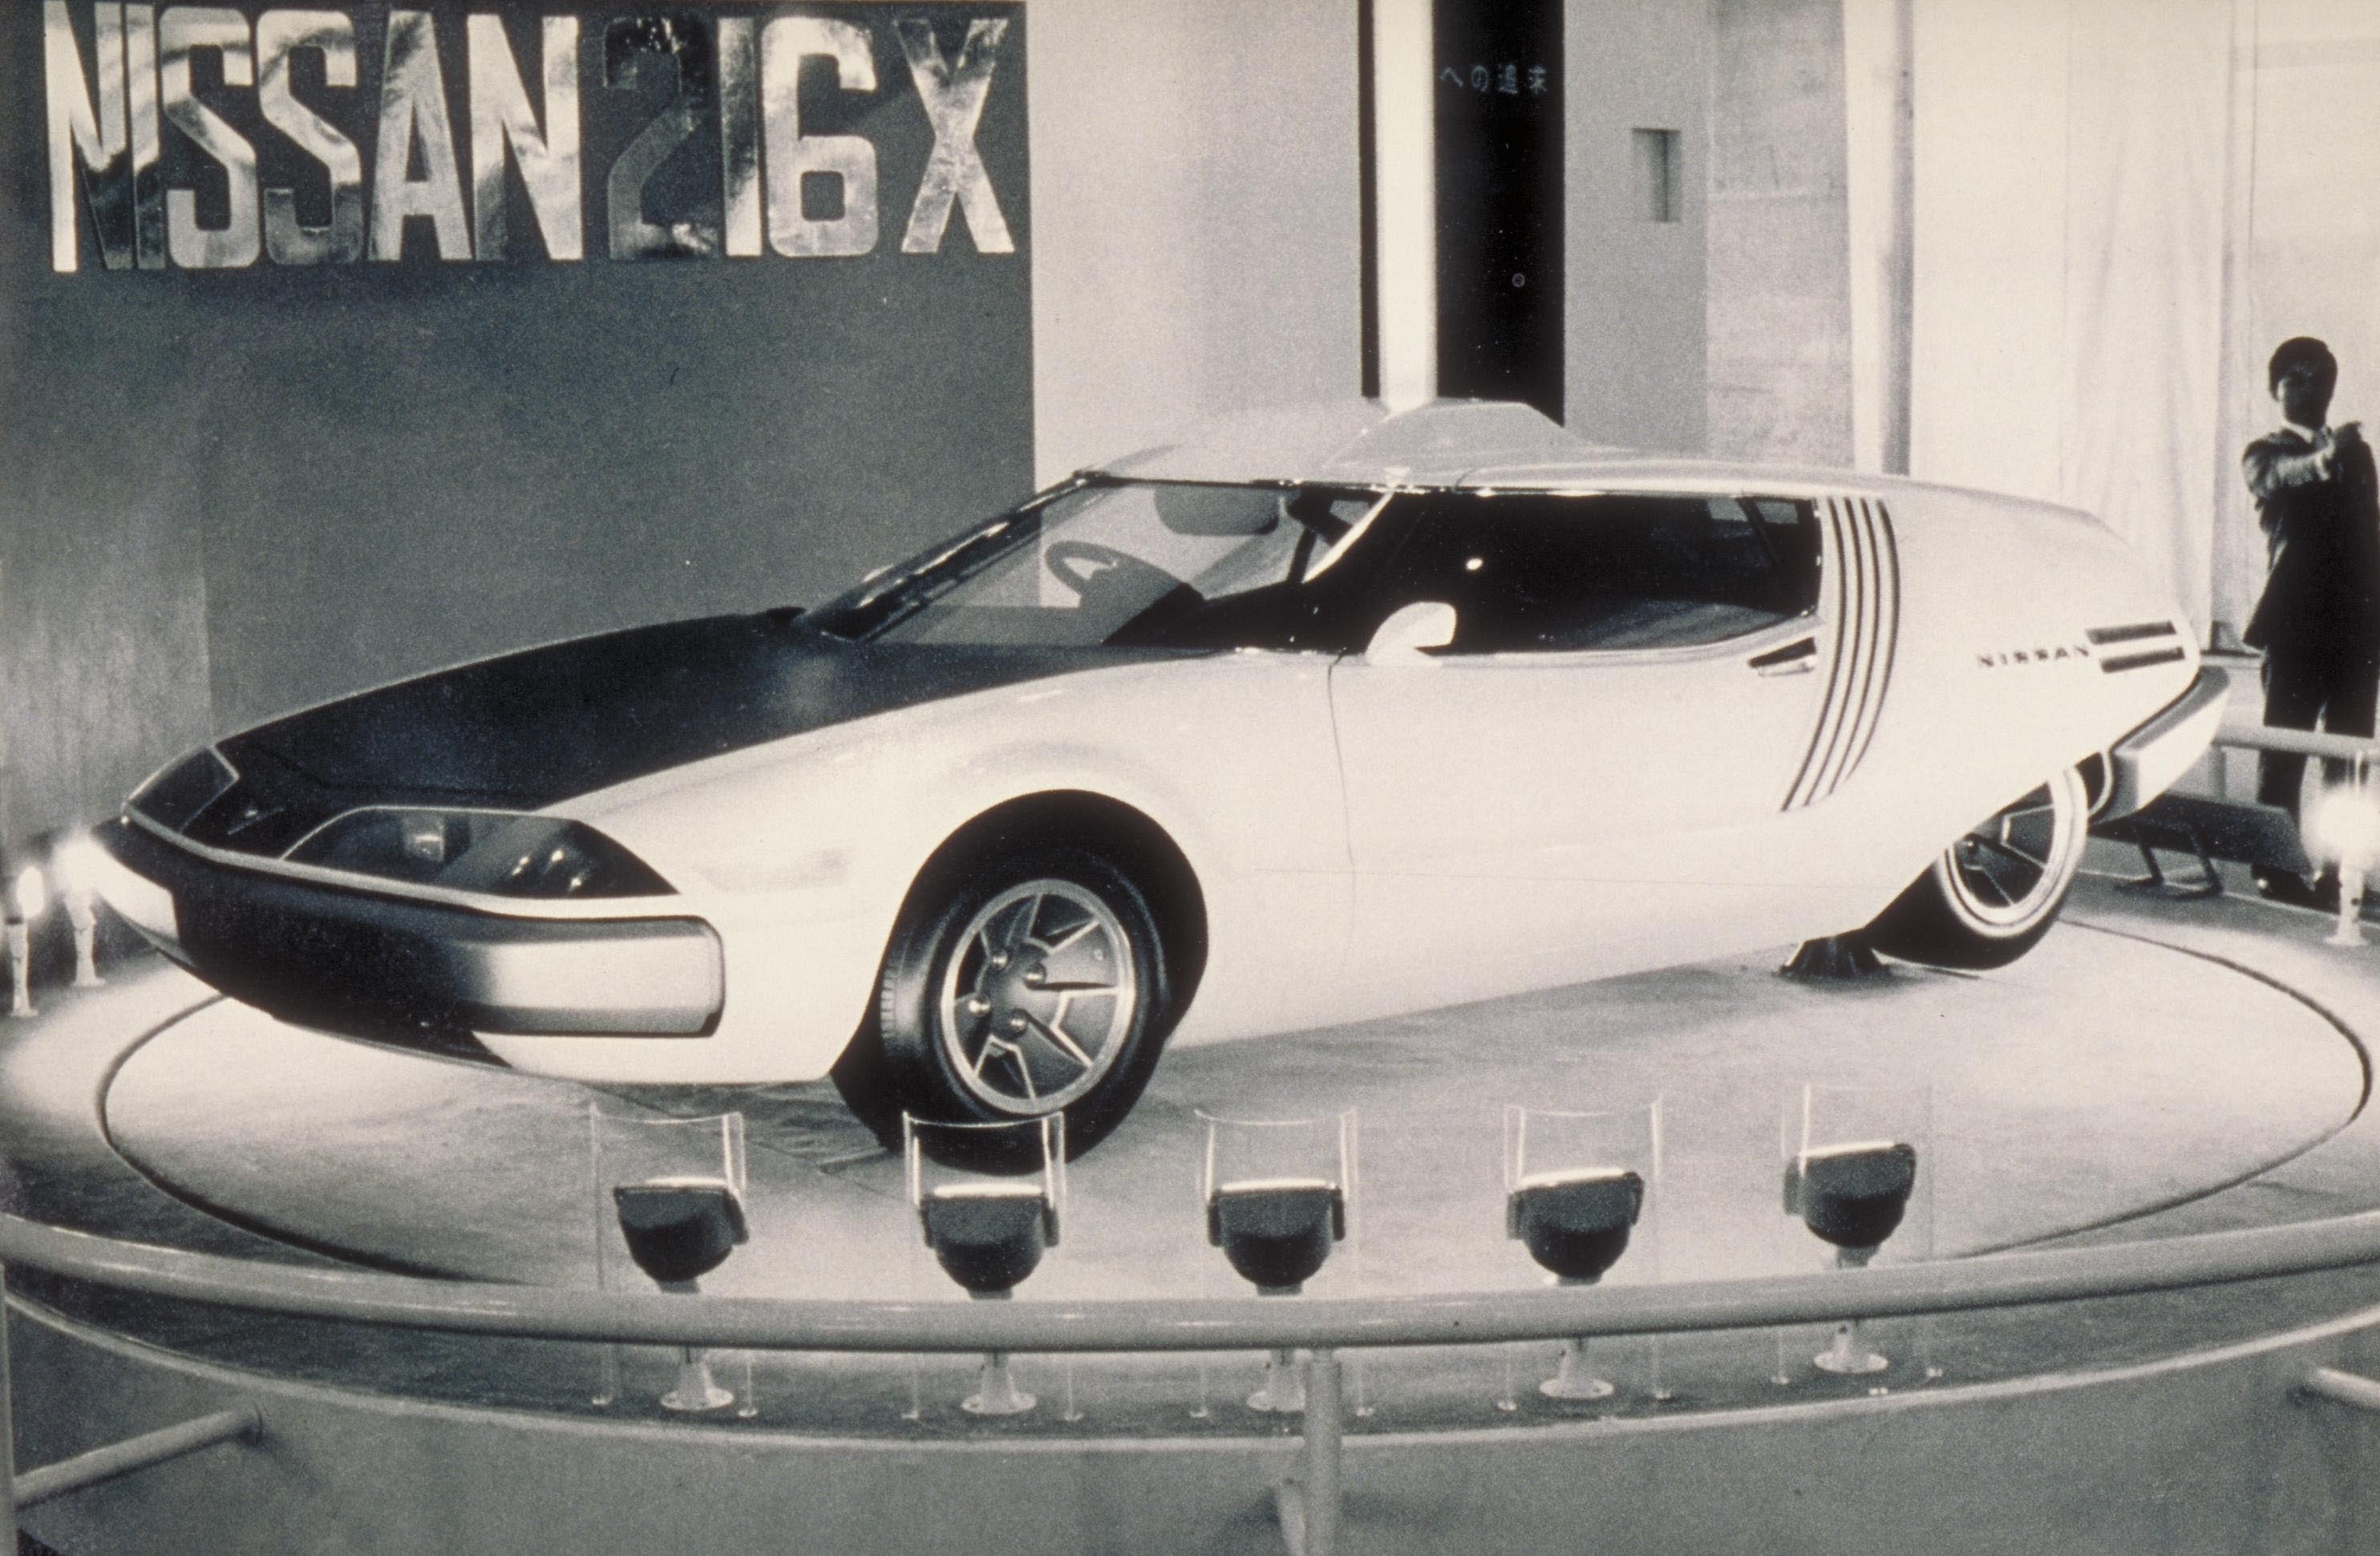 1971 Nissan 216X concept car